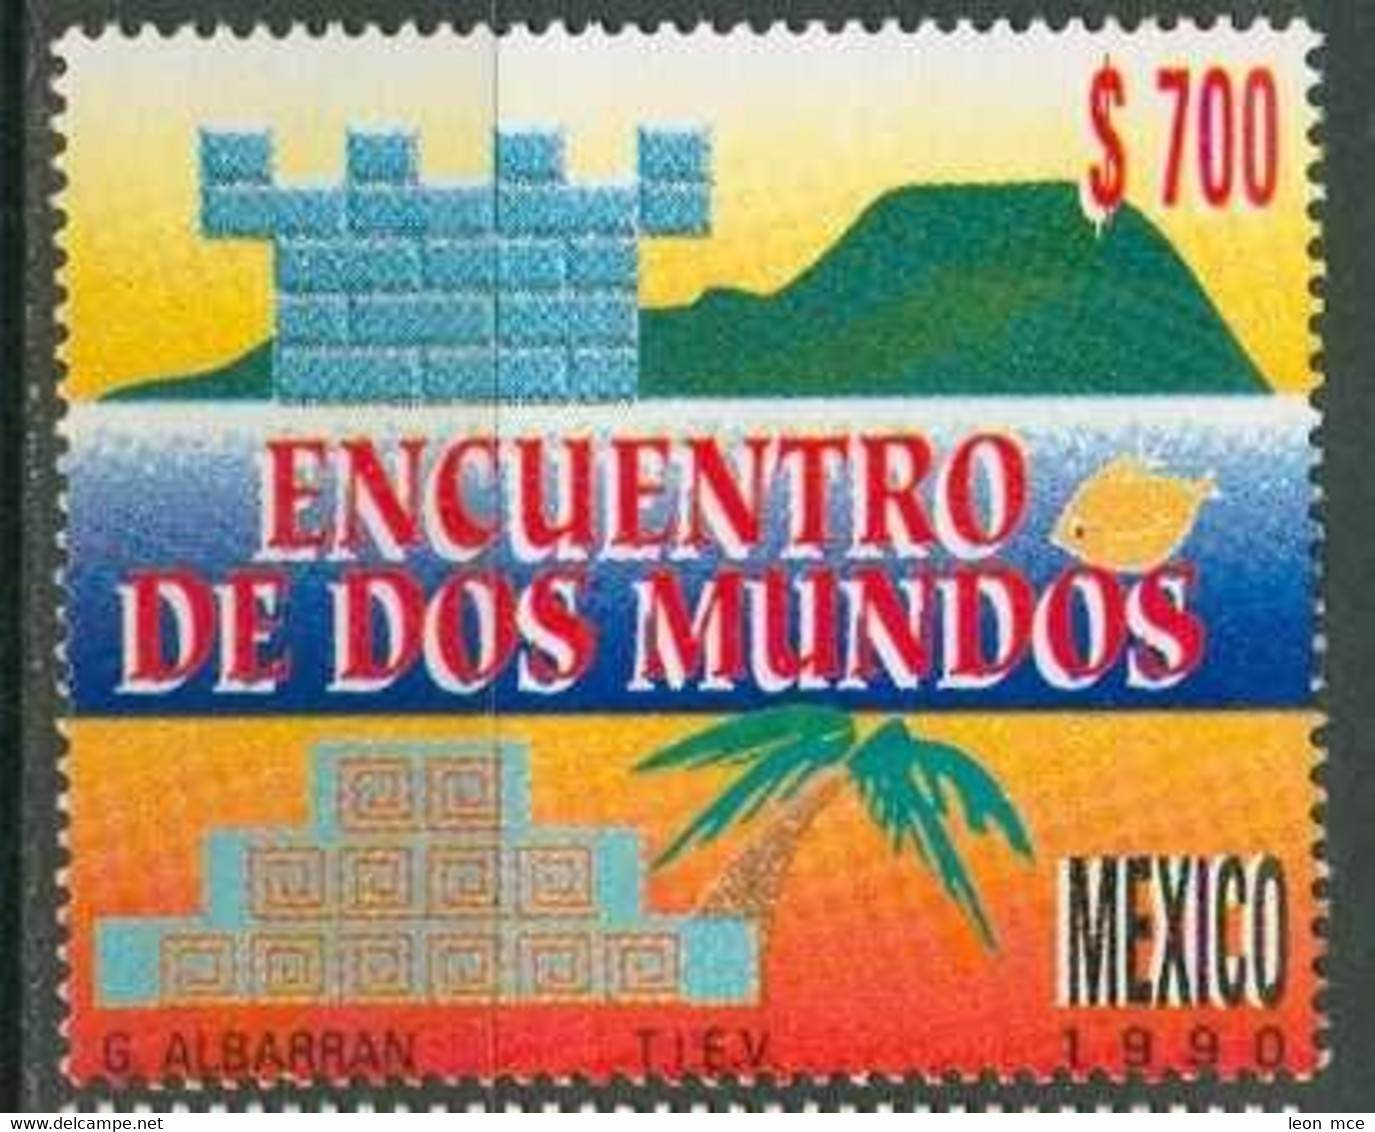 1990 MÉXICO ENCUENTRO DE DOS MUNDOS Sc. 1668 MNH, Discovery Of America - Mexico